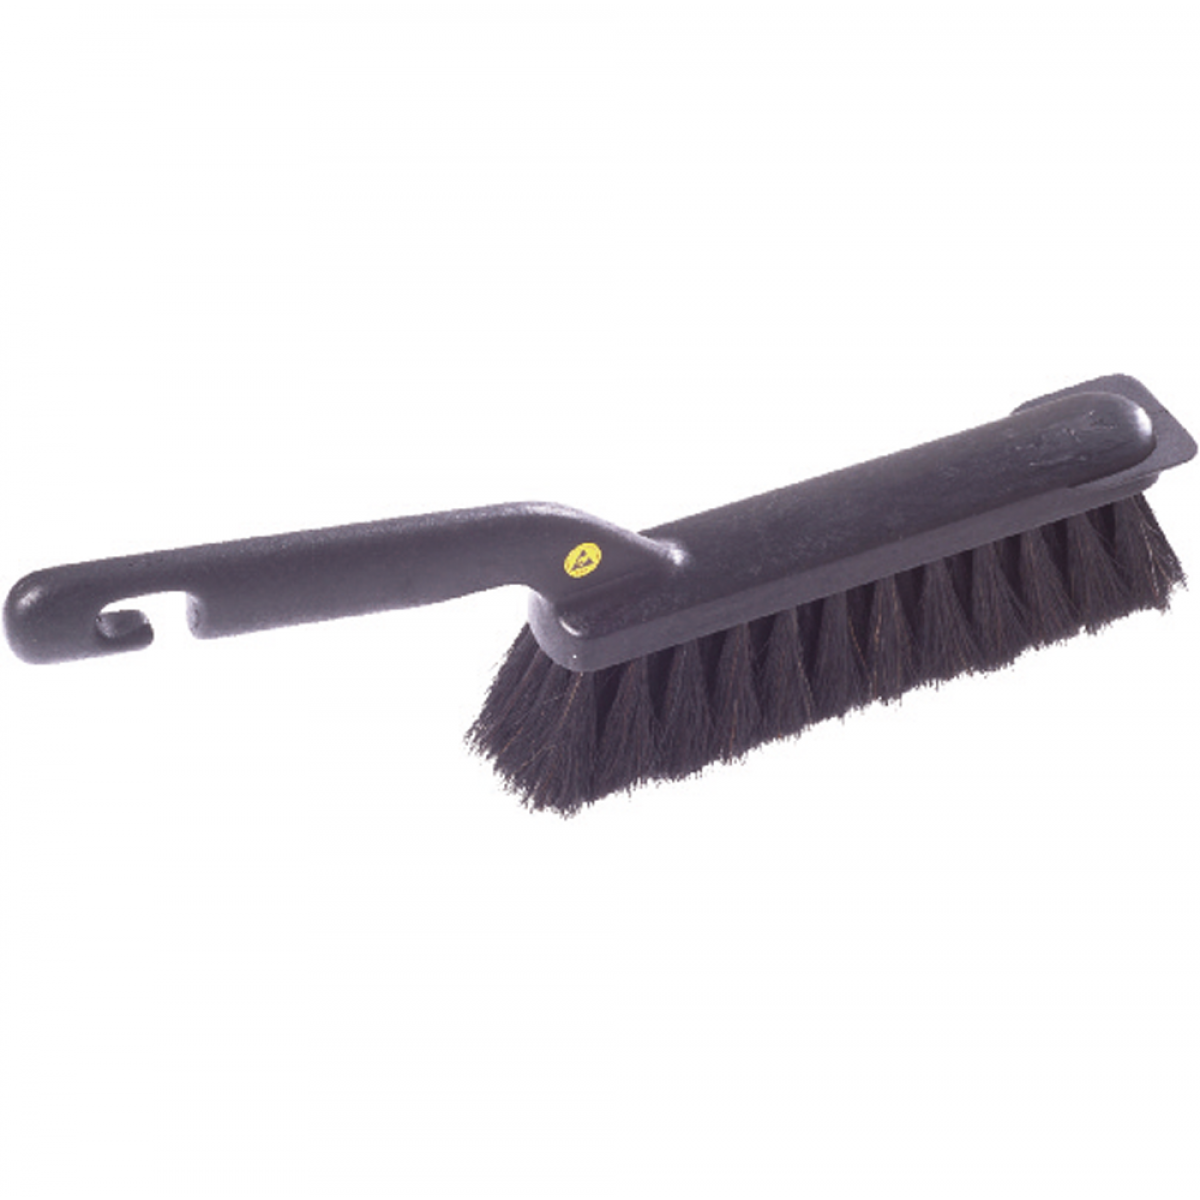 Variation:ESD hand broom bristle surface 160 mm, Bristle surface:160 mm